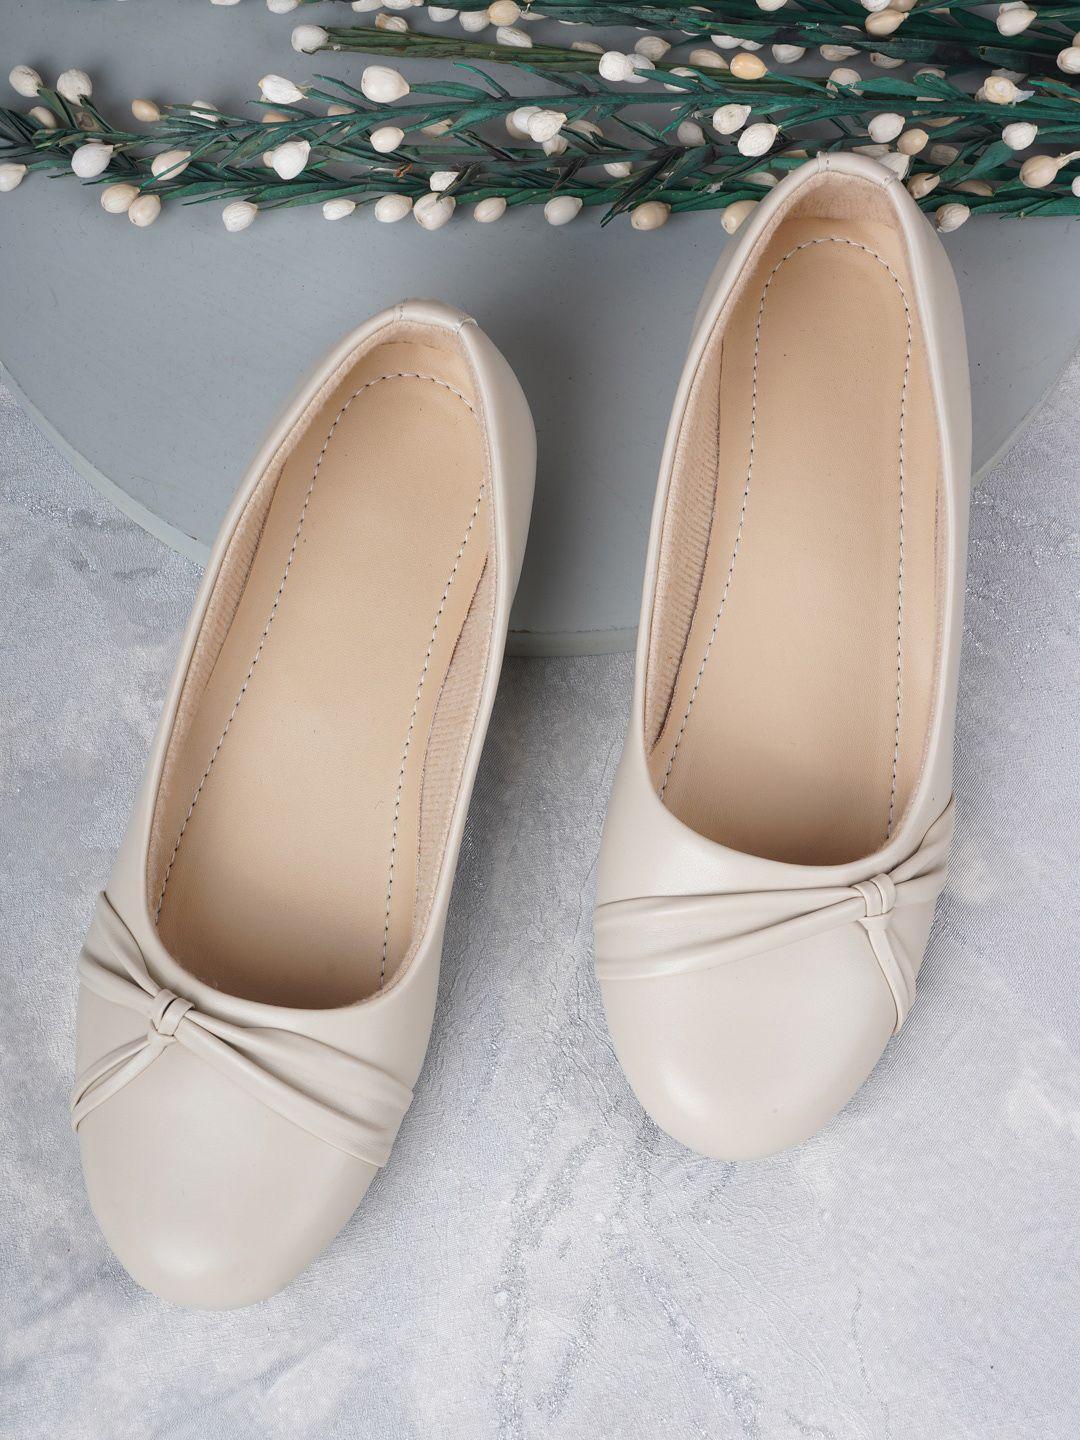 style-shoes-women-cream-coloured-ballerinas-flats